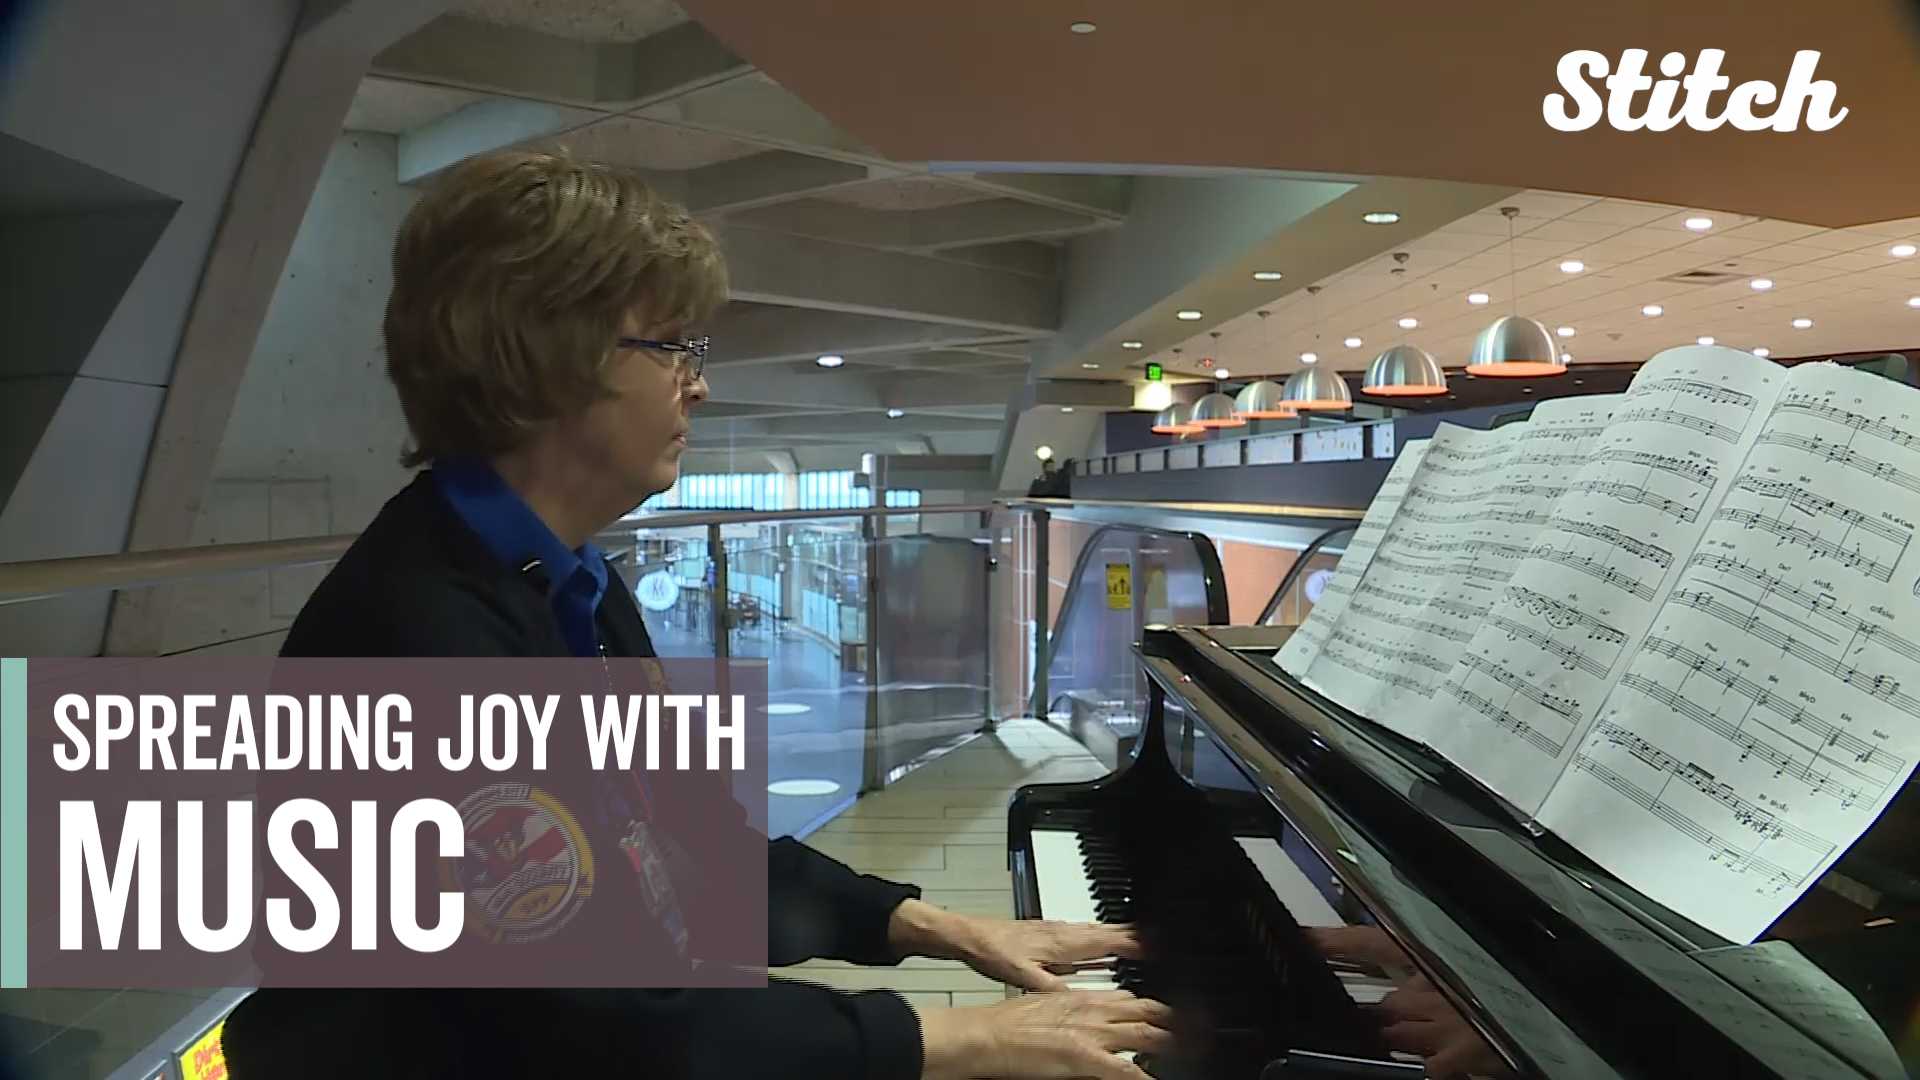 TSA screener, breast cancer survivor uses piano keys to spread joy